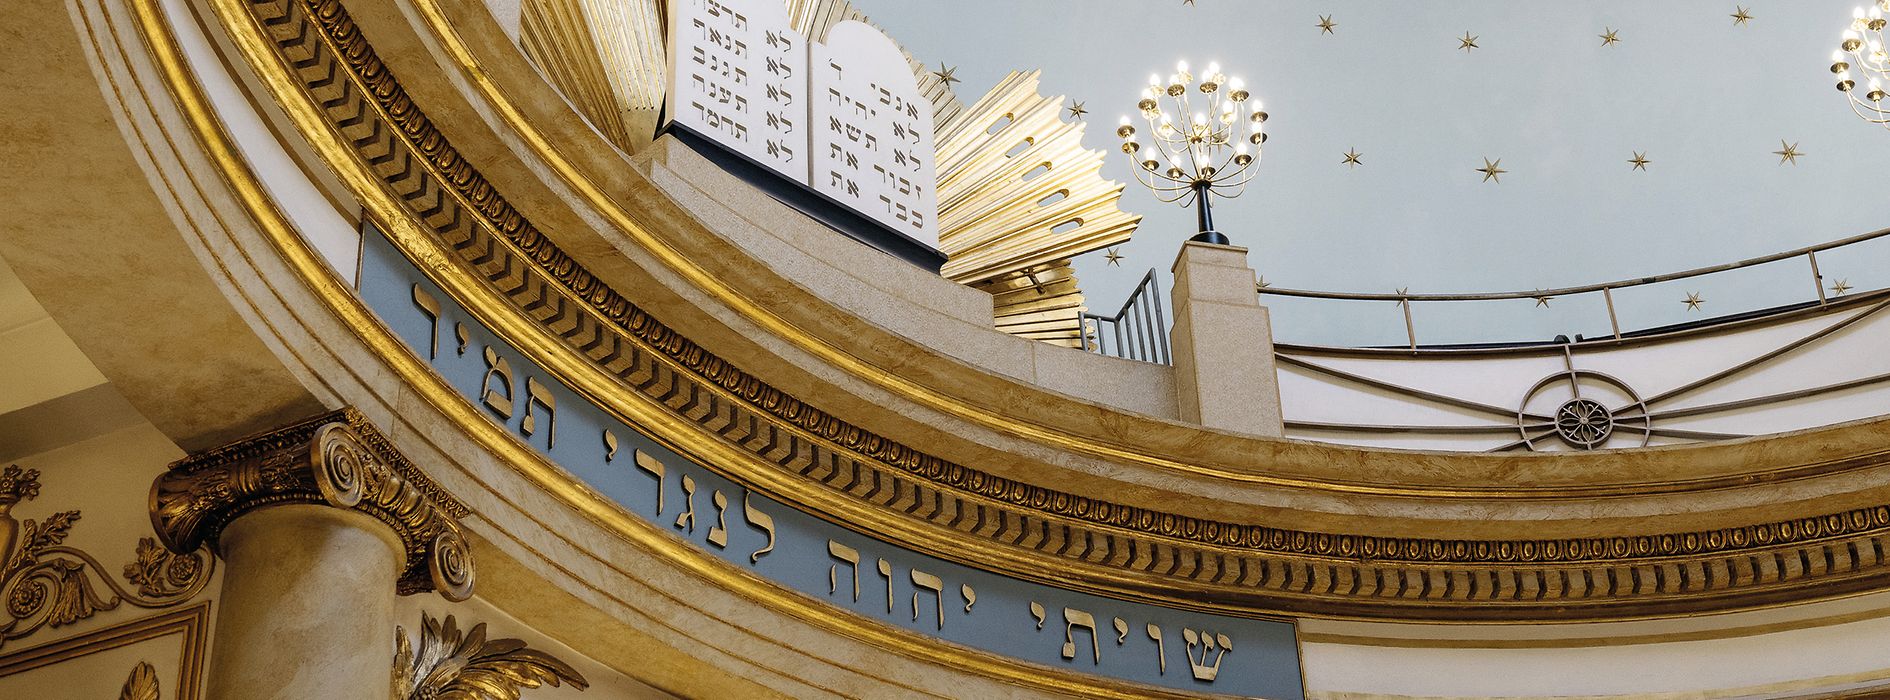 City Temple of the Jewish Community